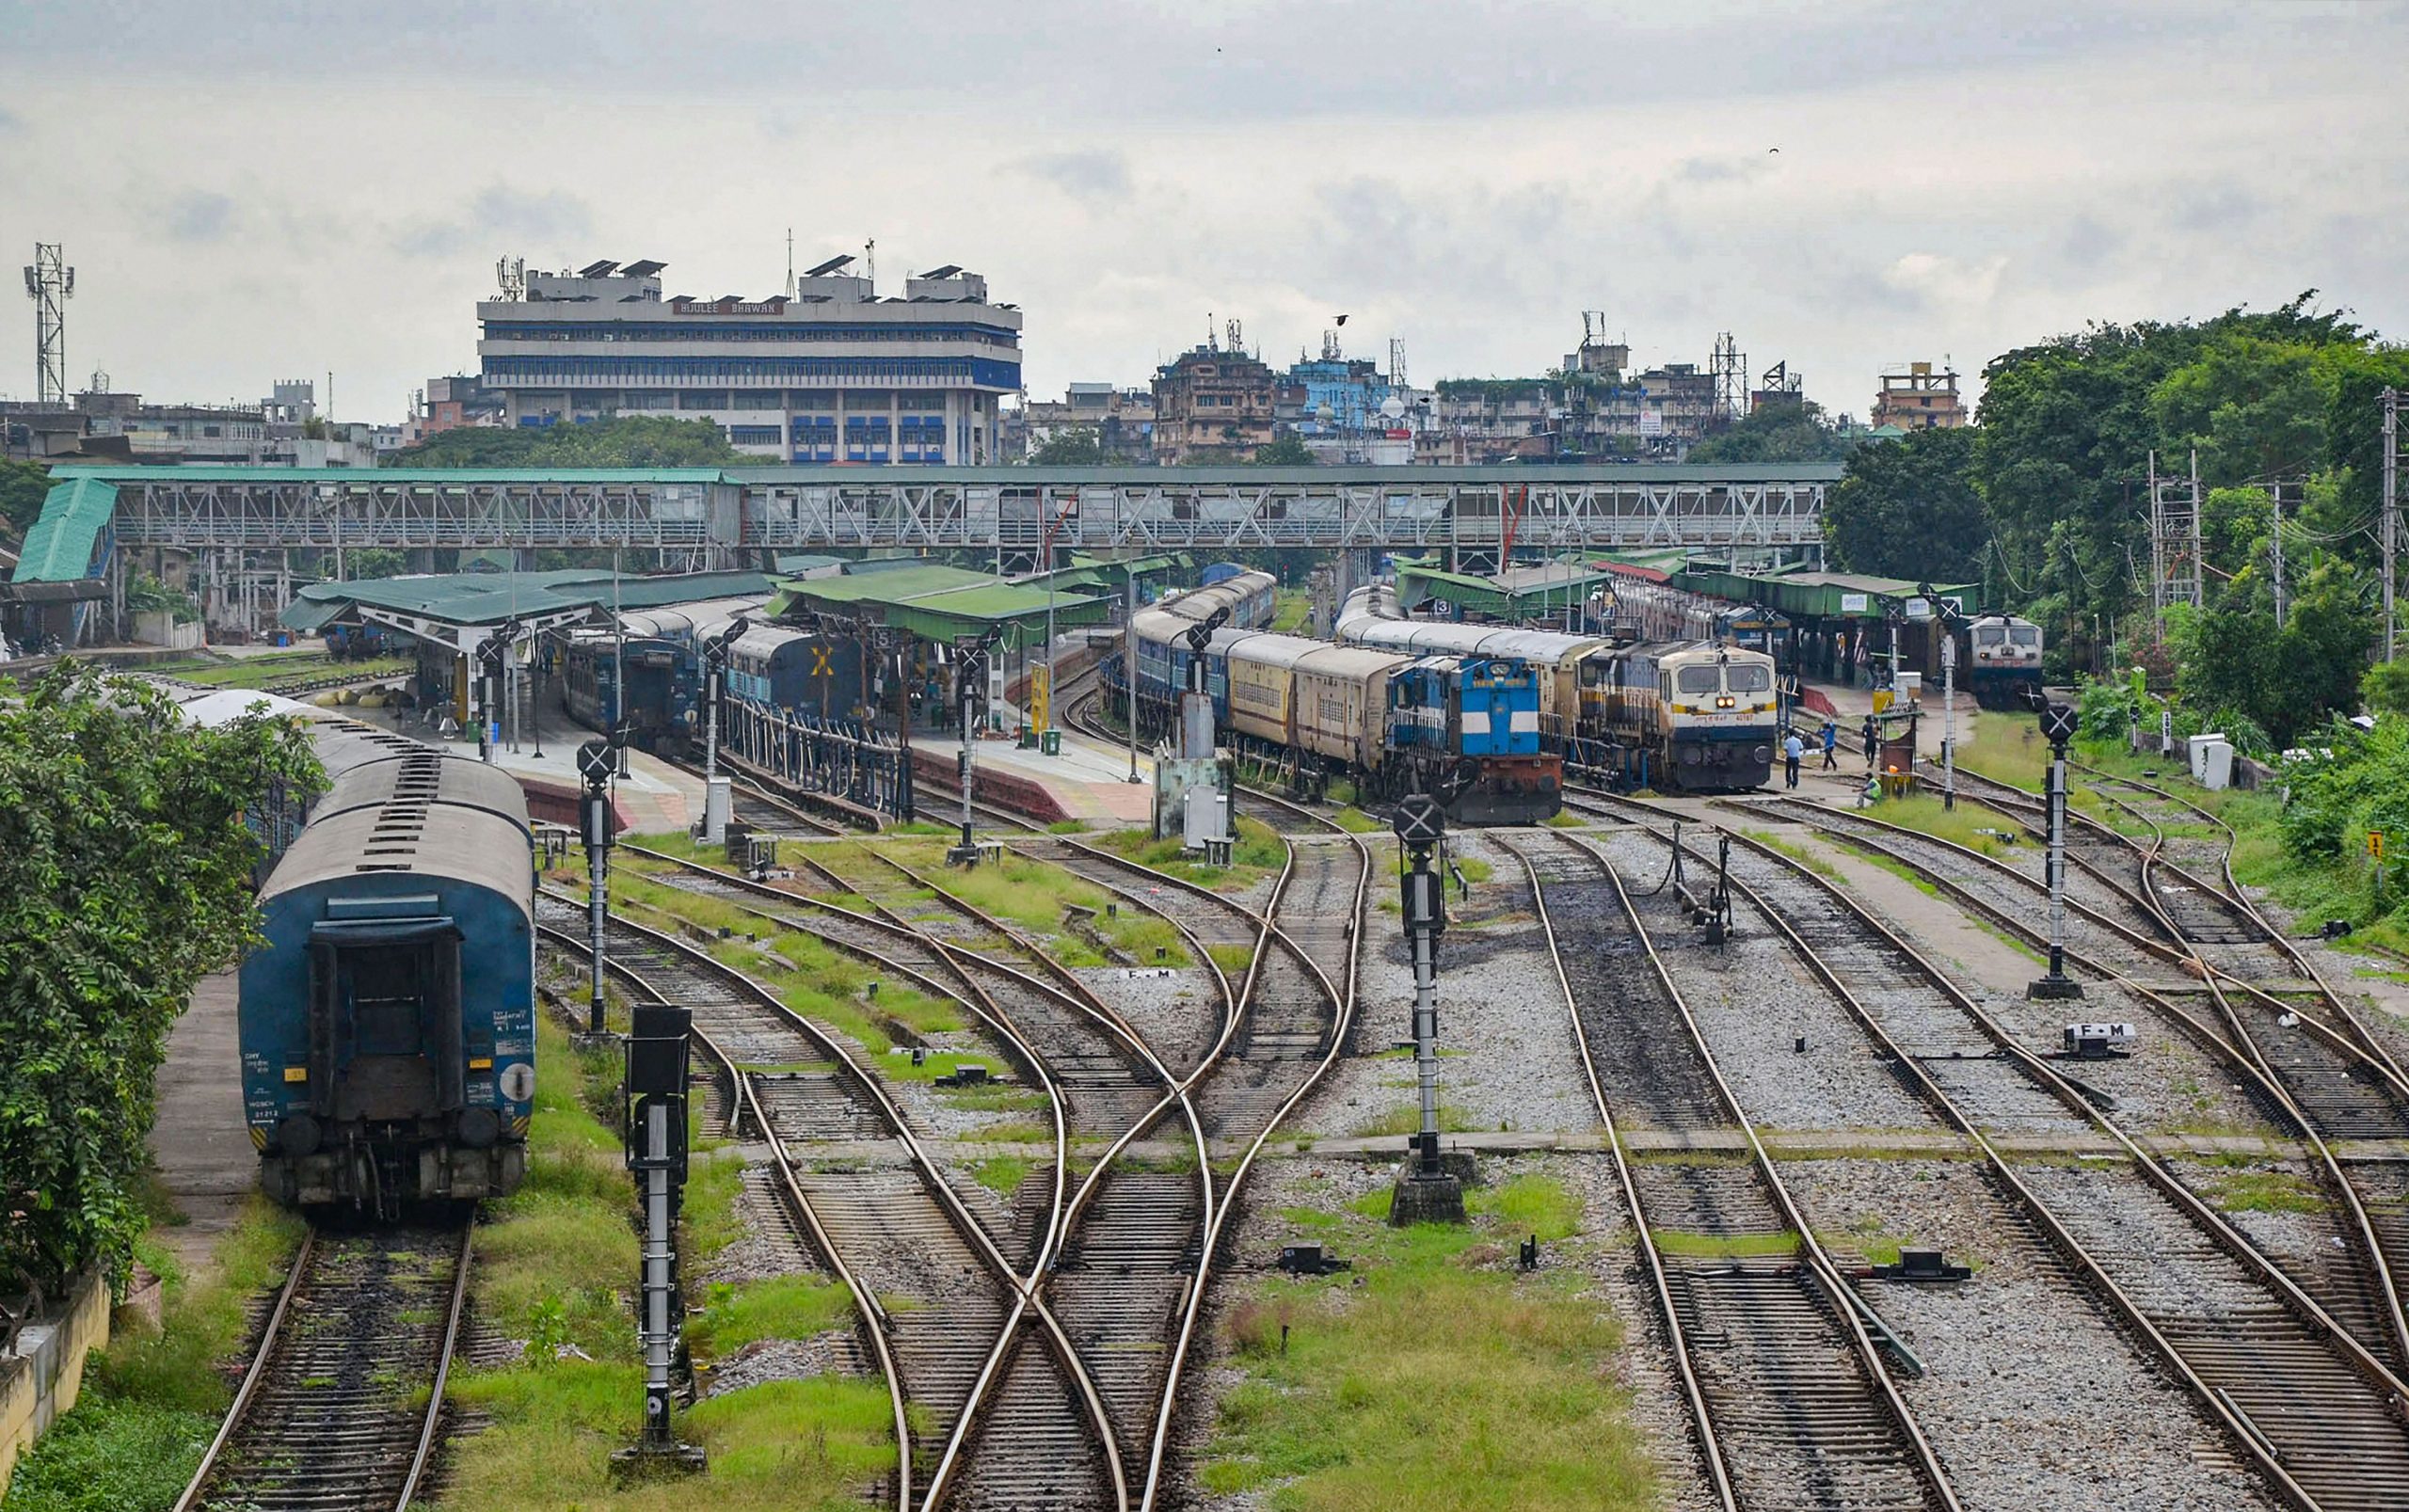 RRB recruitment: Indian Railways starts mega recruitment drive to fill 1.4 lakh vacancies